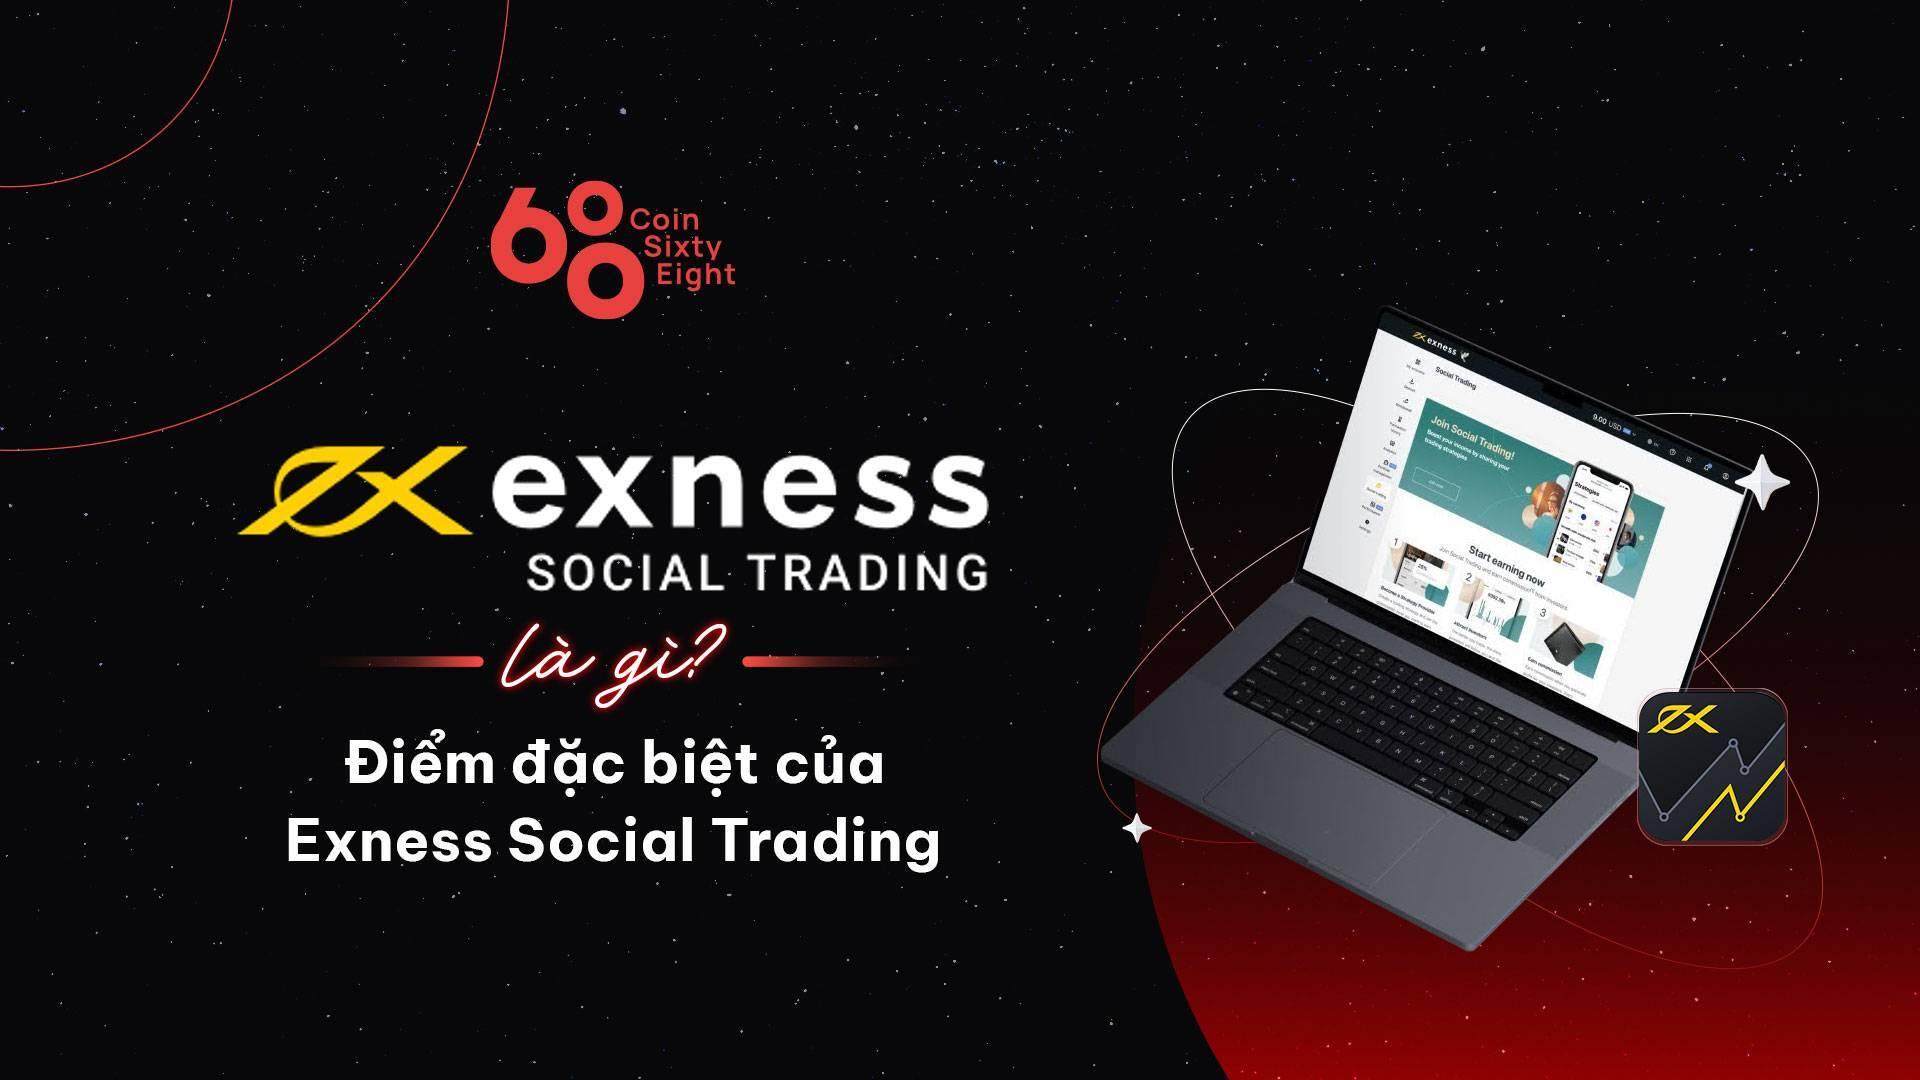 exness-social-trading-la-gi-diem-dac-biet-cua-exness-social-trading